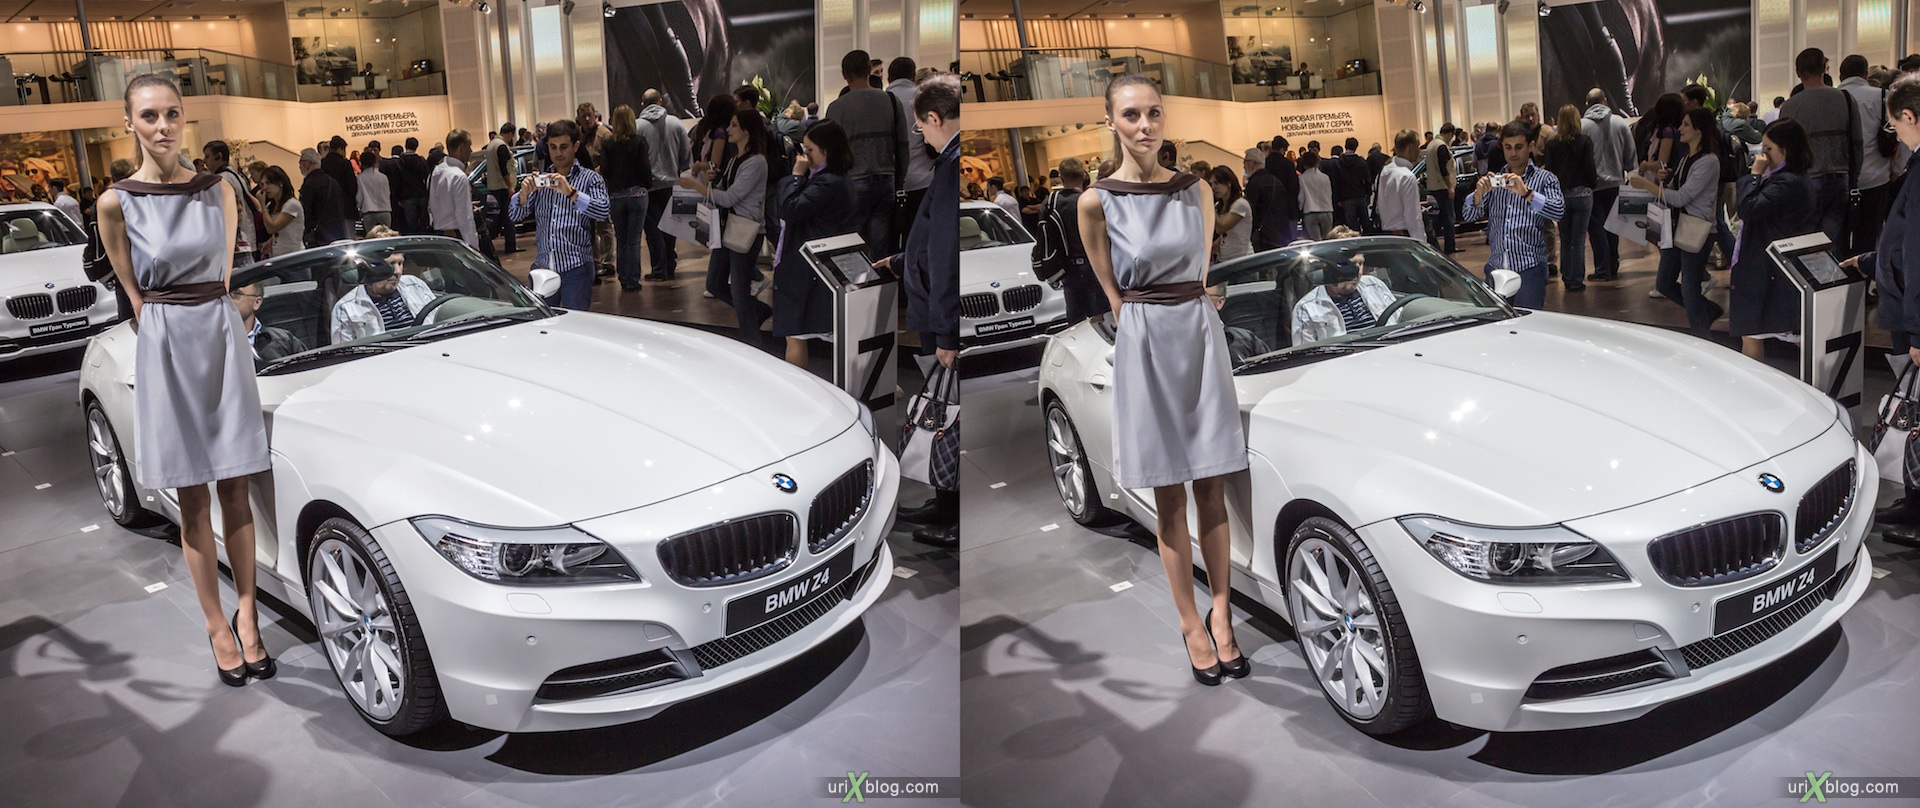 2012, BMW Z4, девушка, модель, girl, model, Moscow International Automobile Salon, auto show, 3D, stereo pair, cross-eyed, crossview